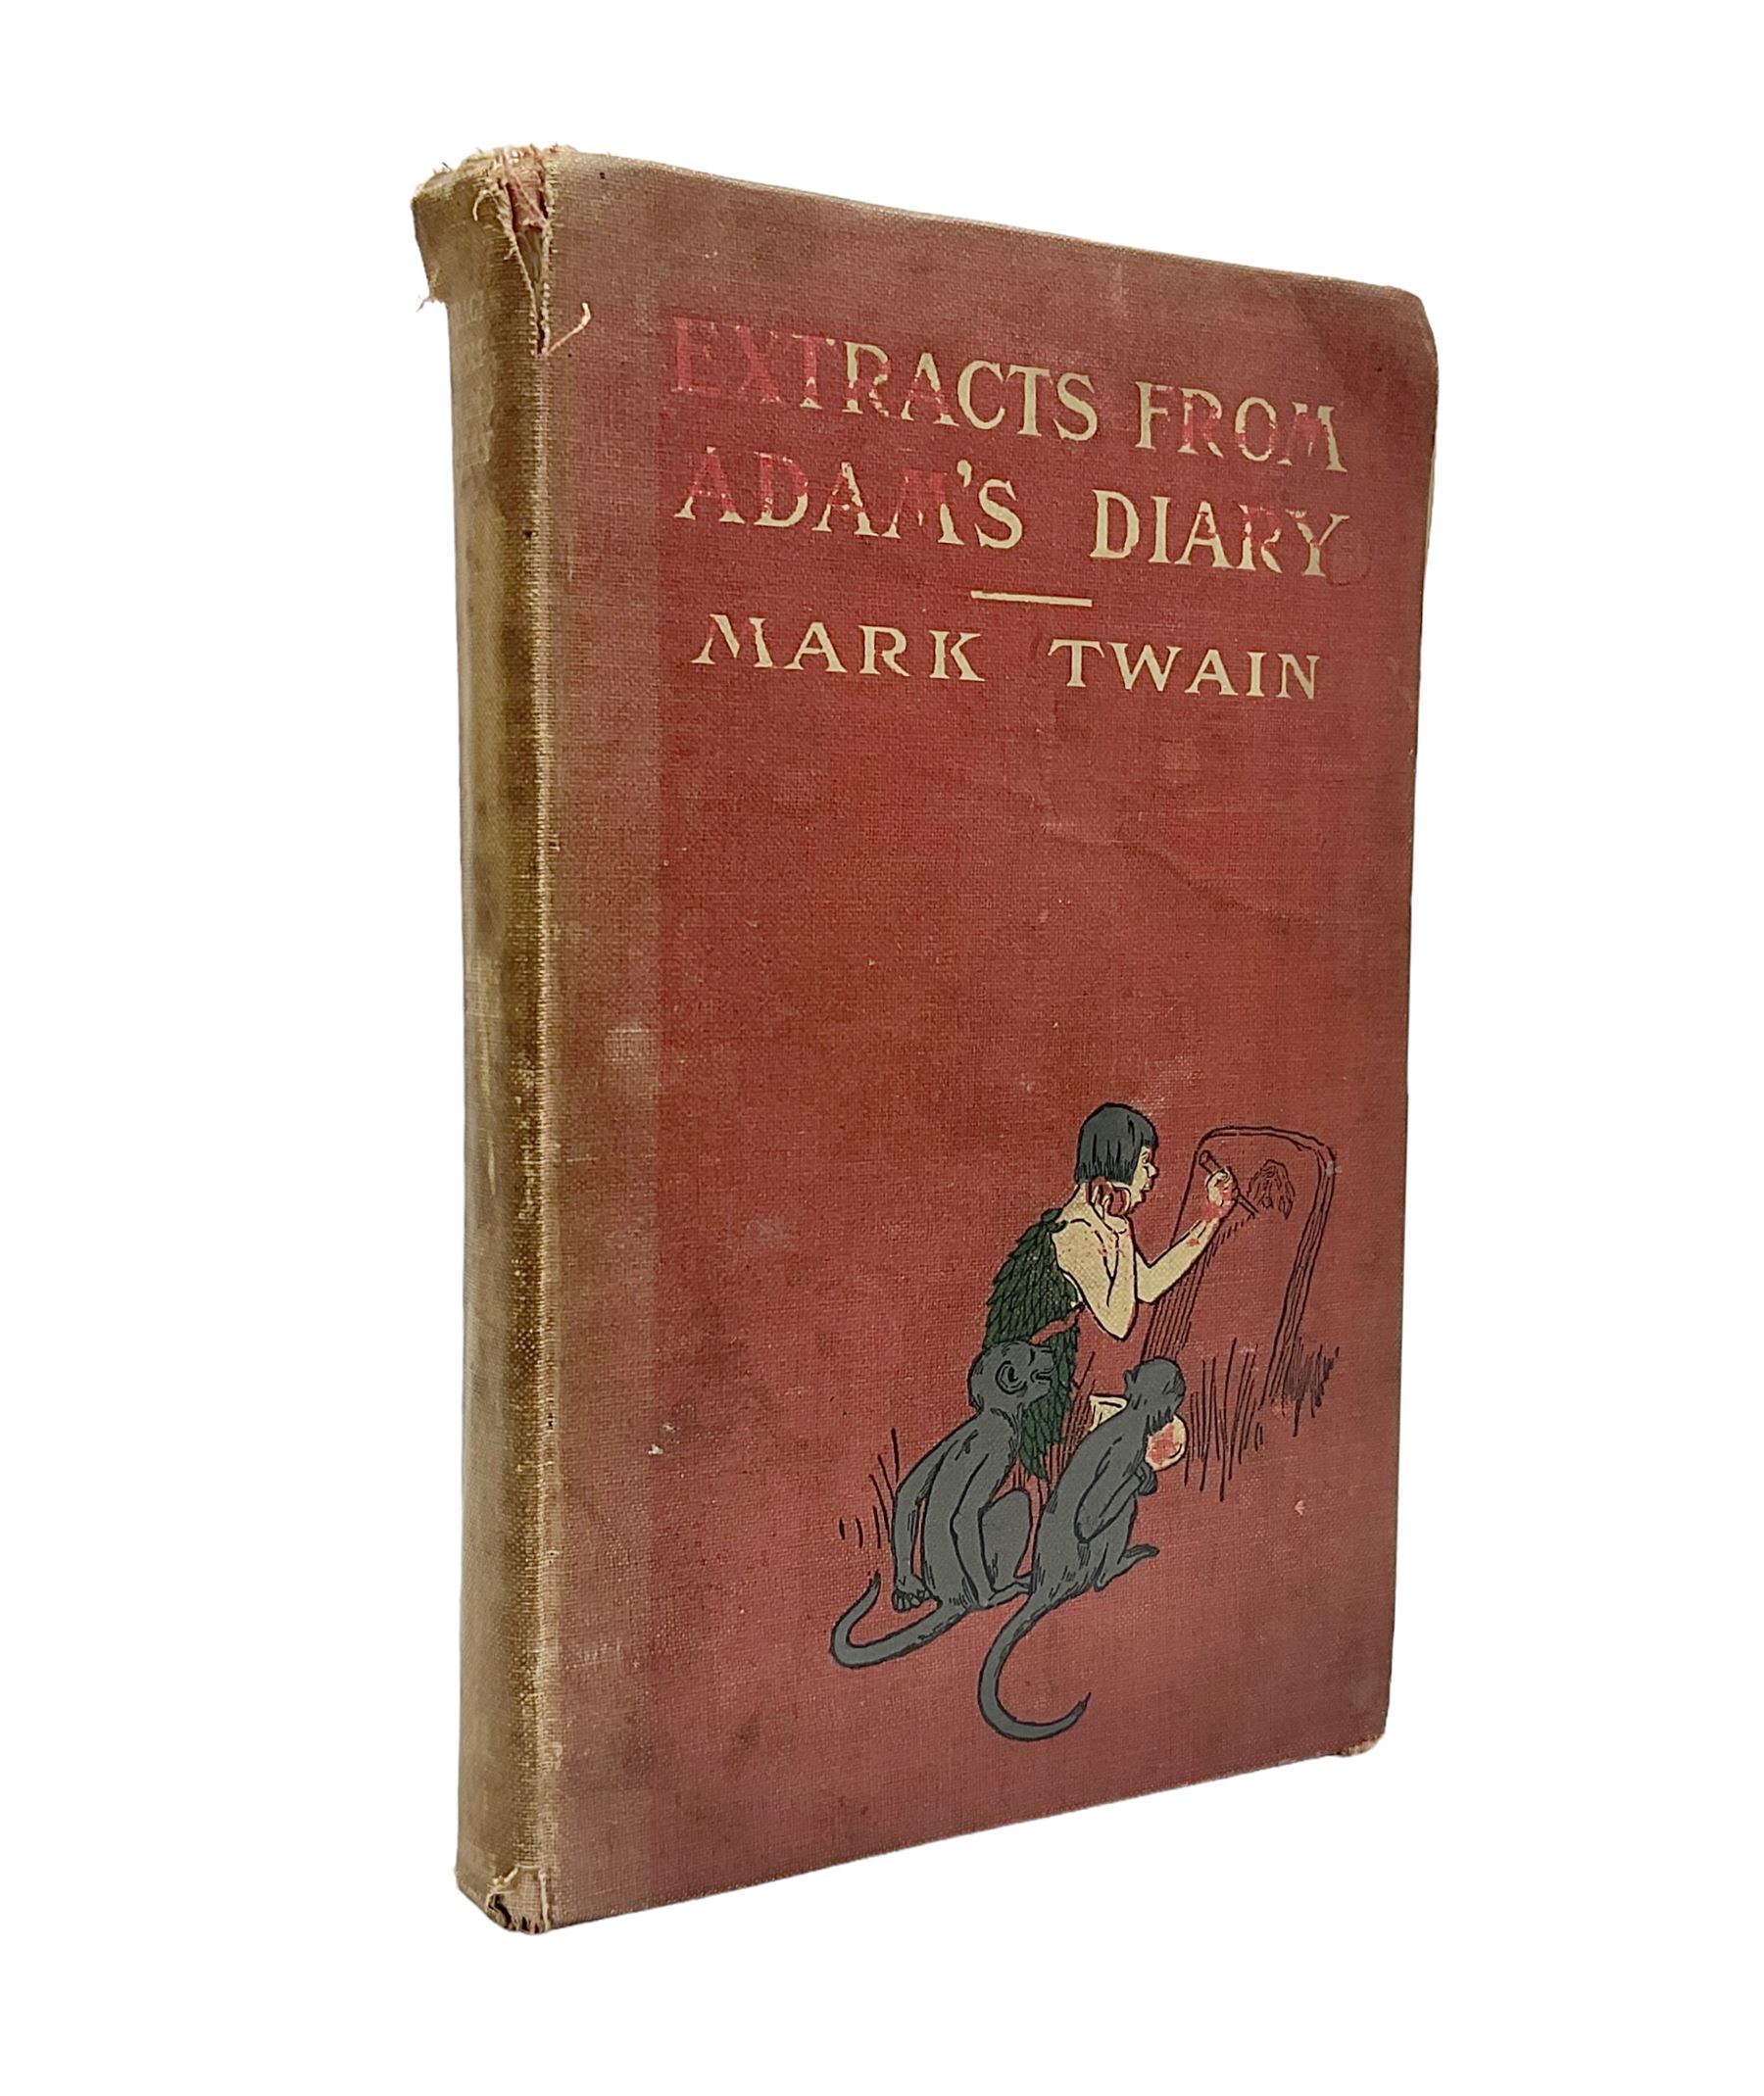 Mark Twain; Extracts from Adam's Diary